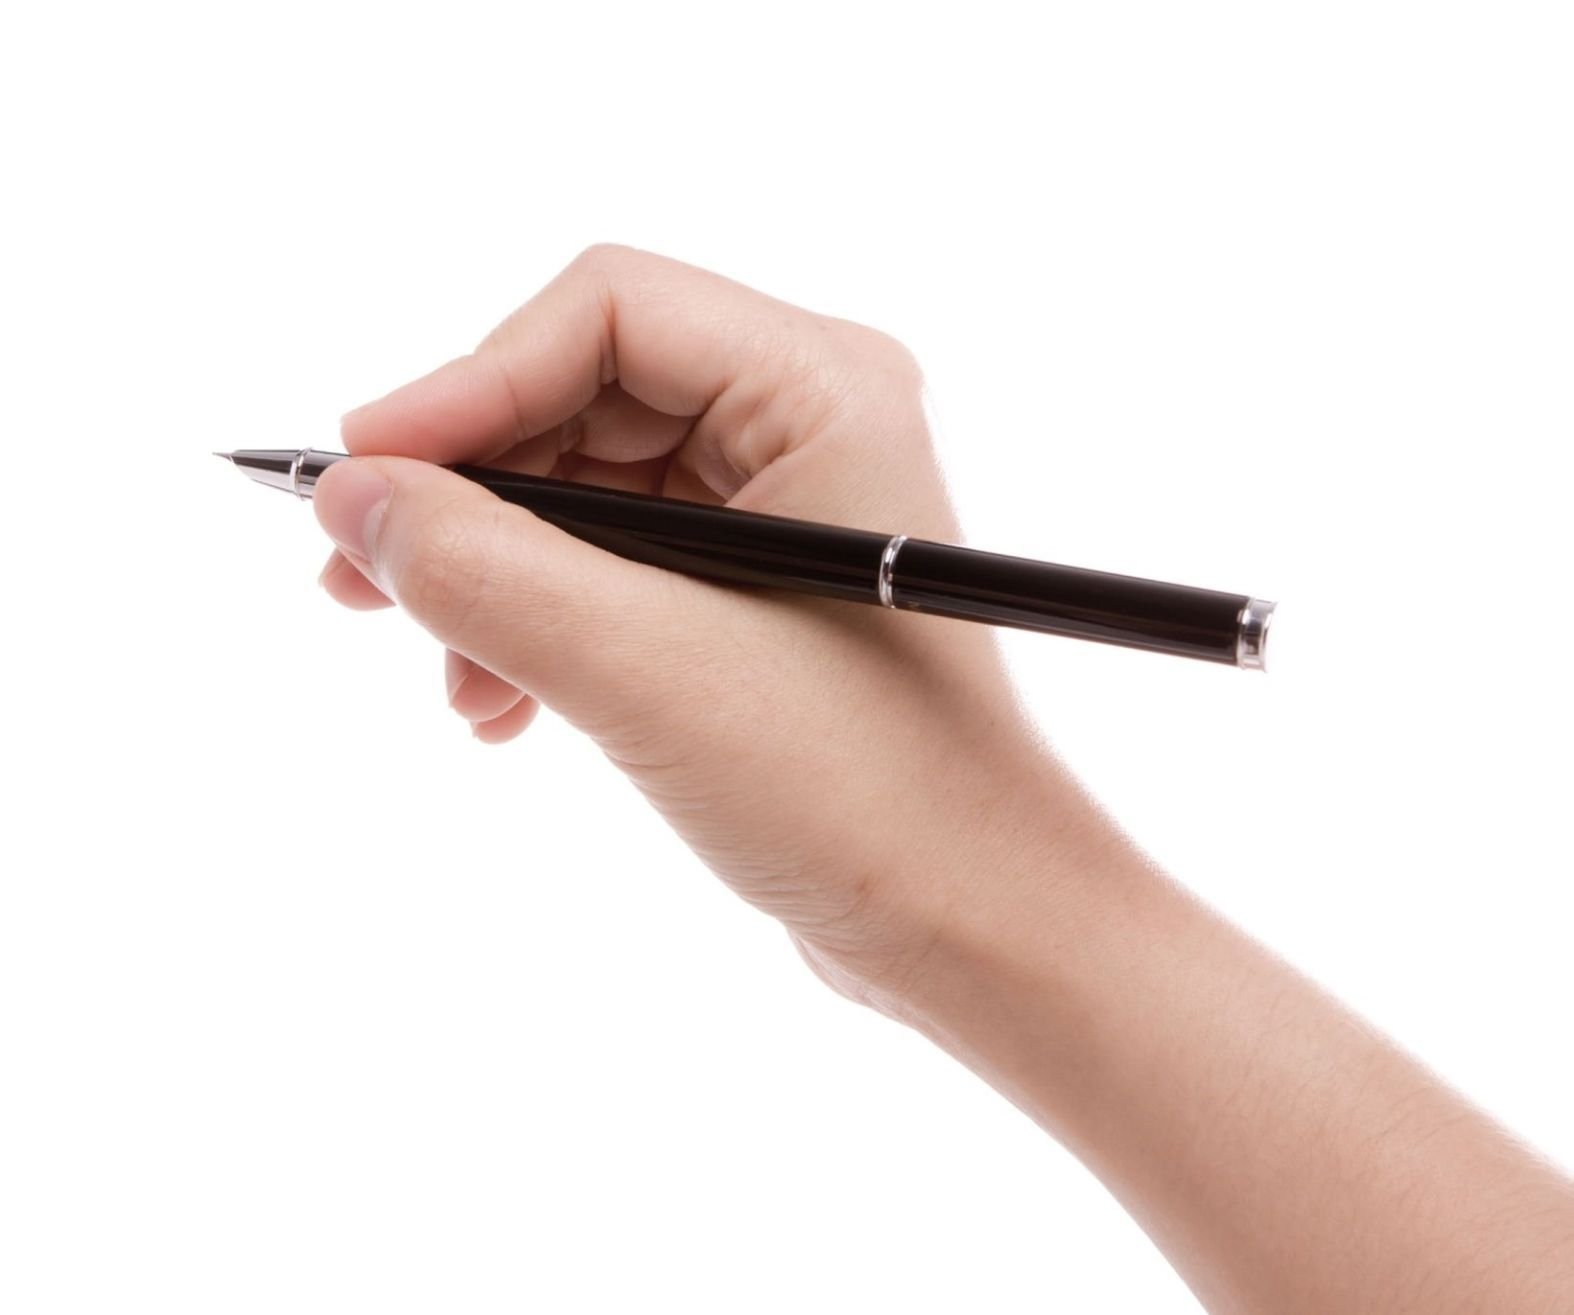 I don t have a pen. Рука с ручкой. Рука с авторучкой. Женская рука с ручкой. Рука держит ручку.